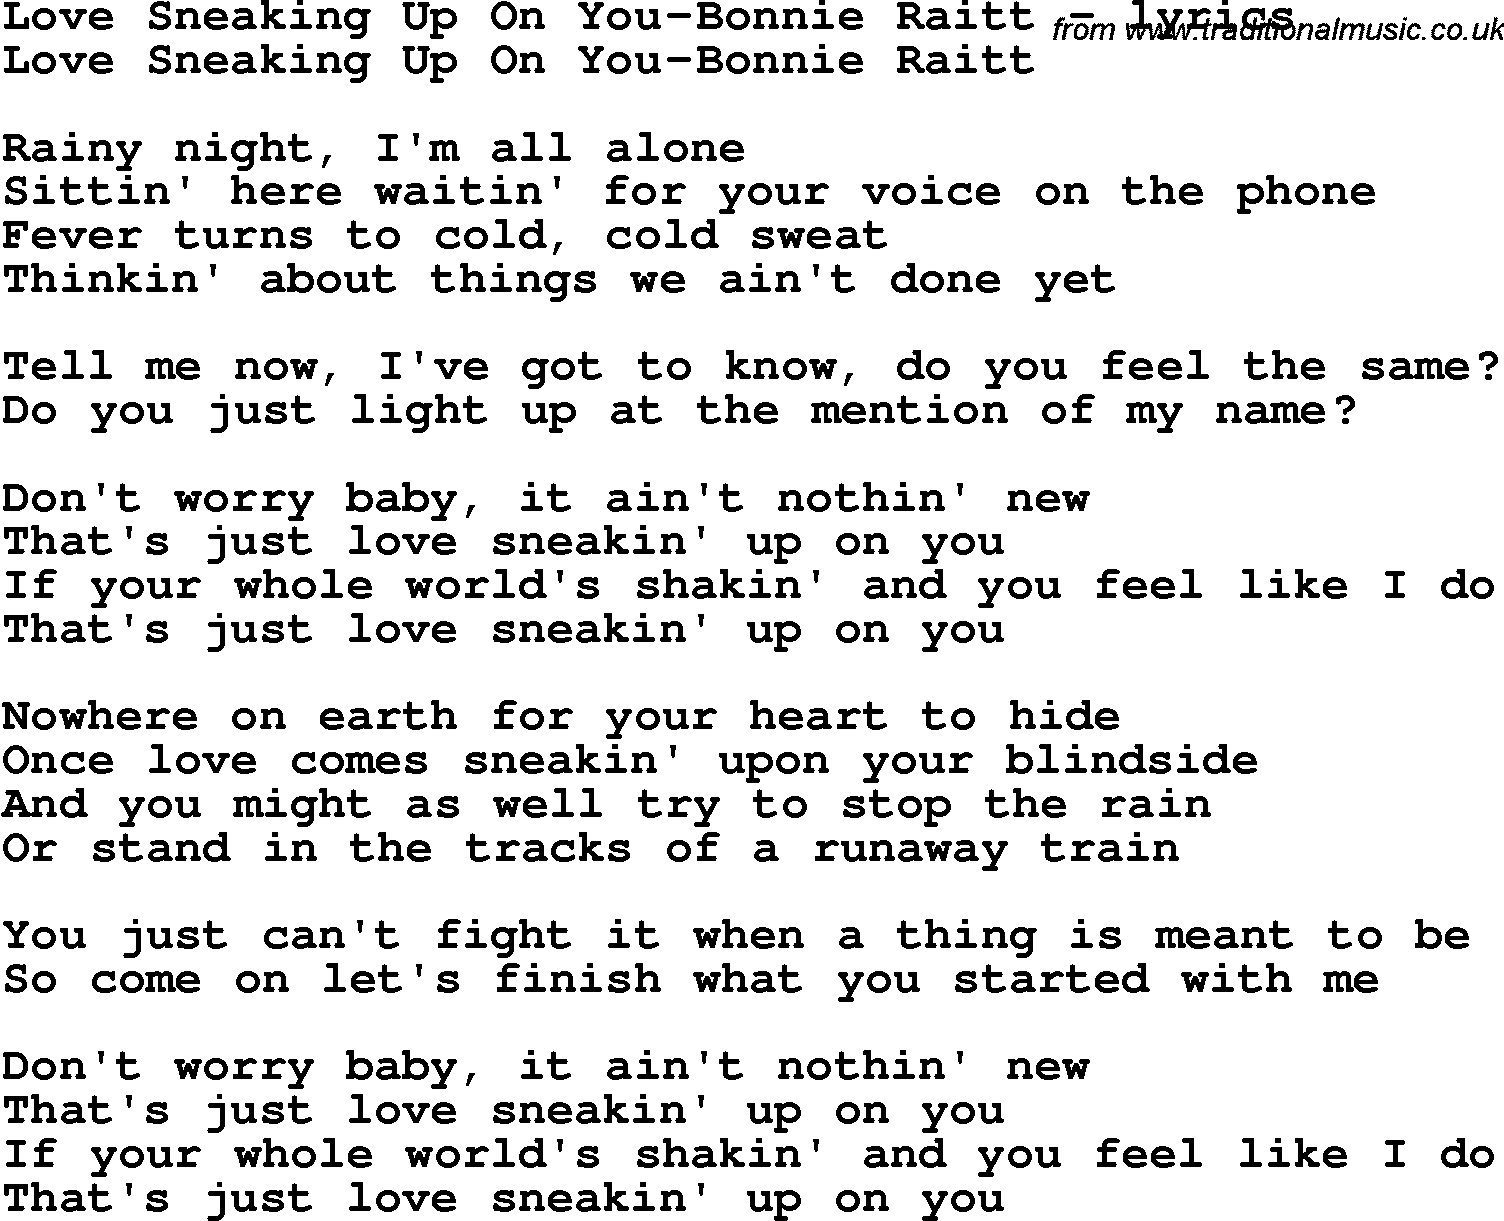 Love Song Lyrics for: Love Sneaking Up On You-Bonnie Raitt